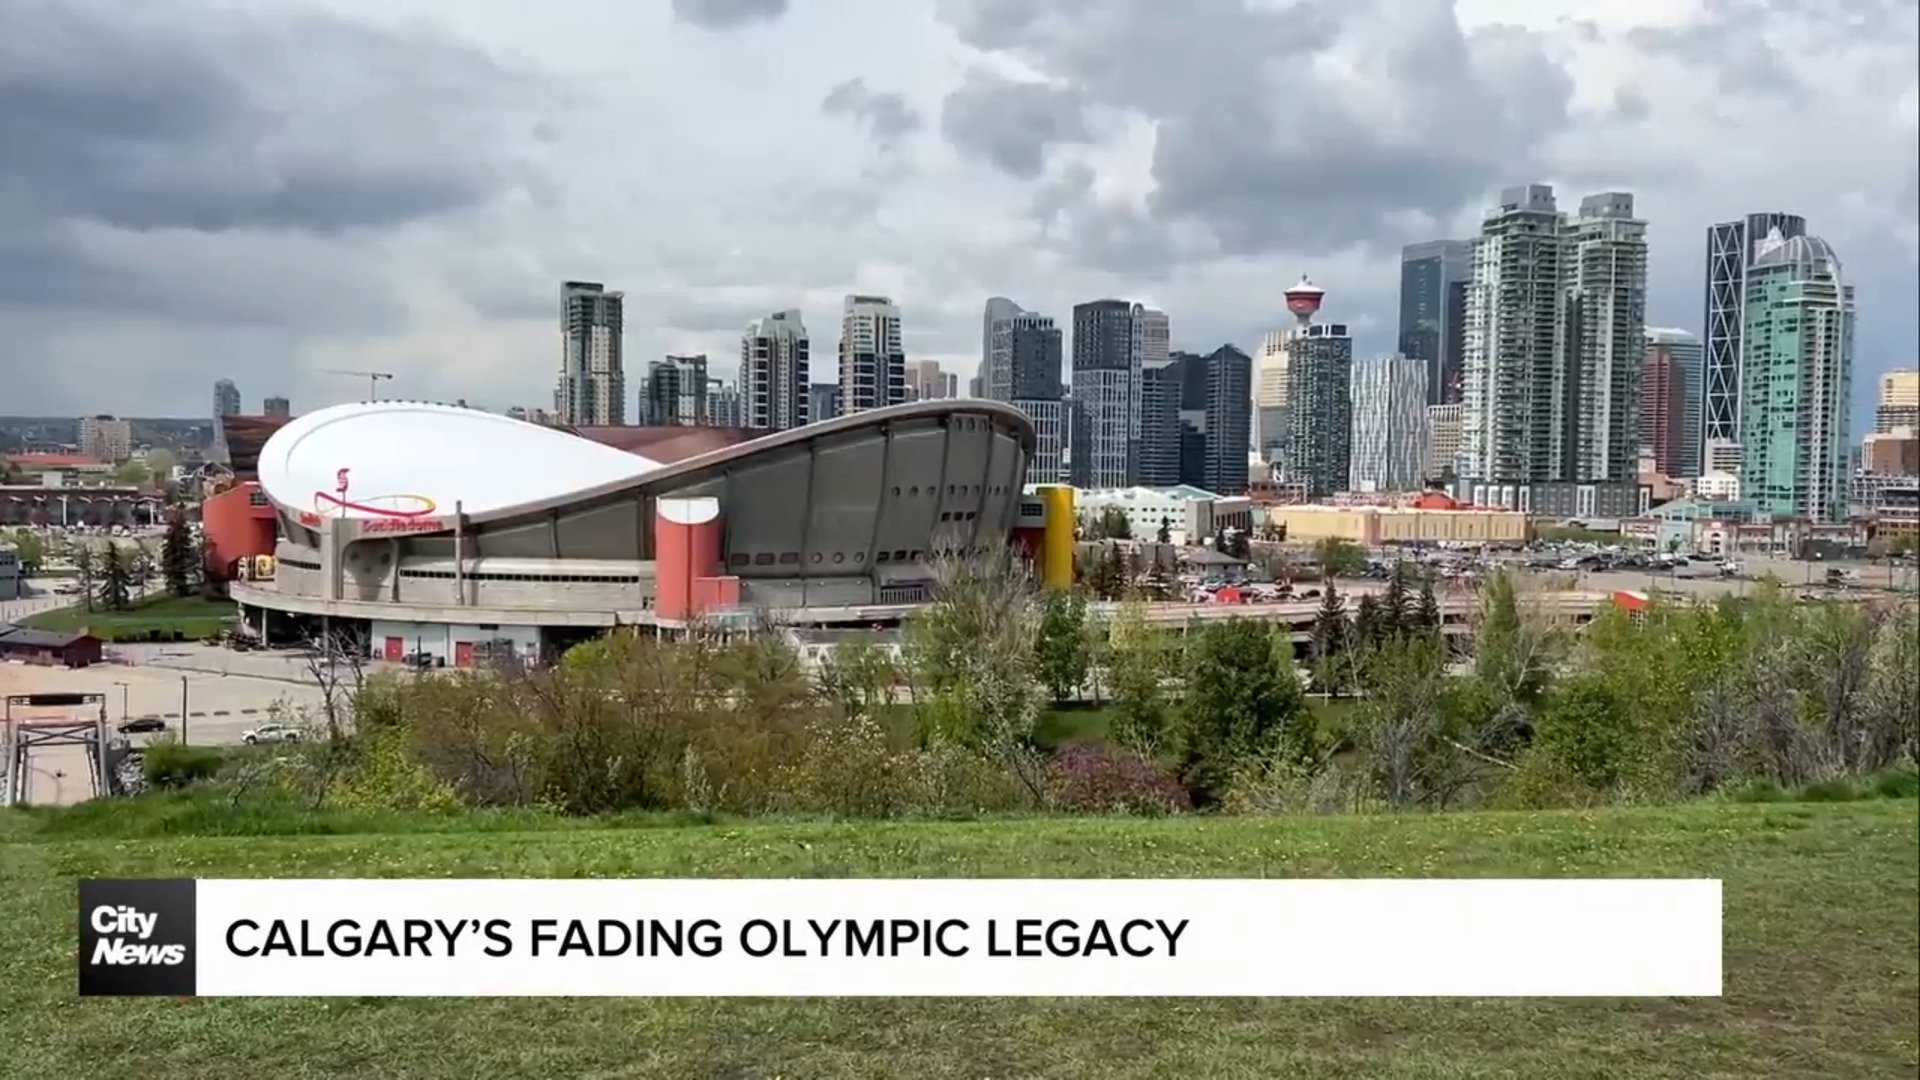 Calgary’s fading Olympic legacy